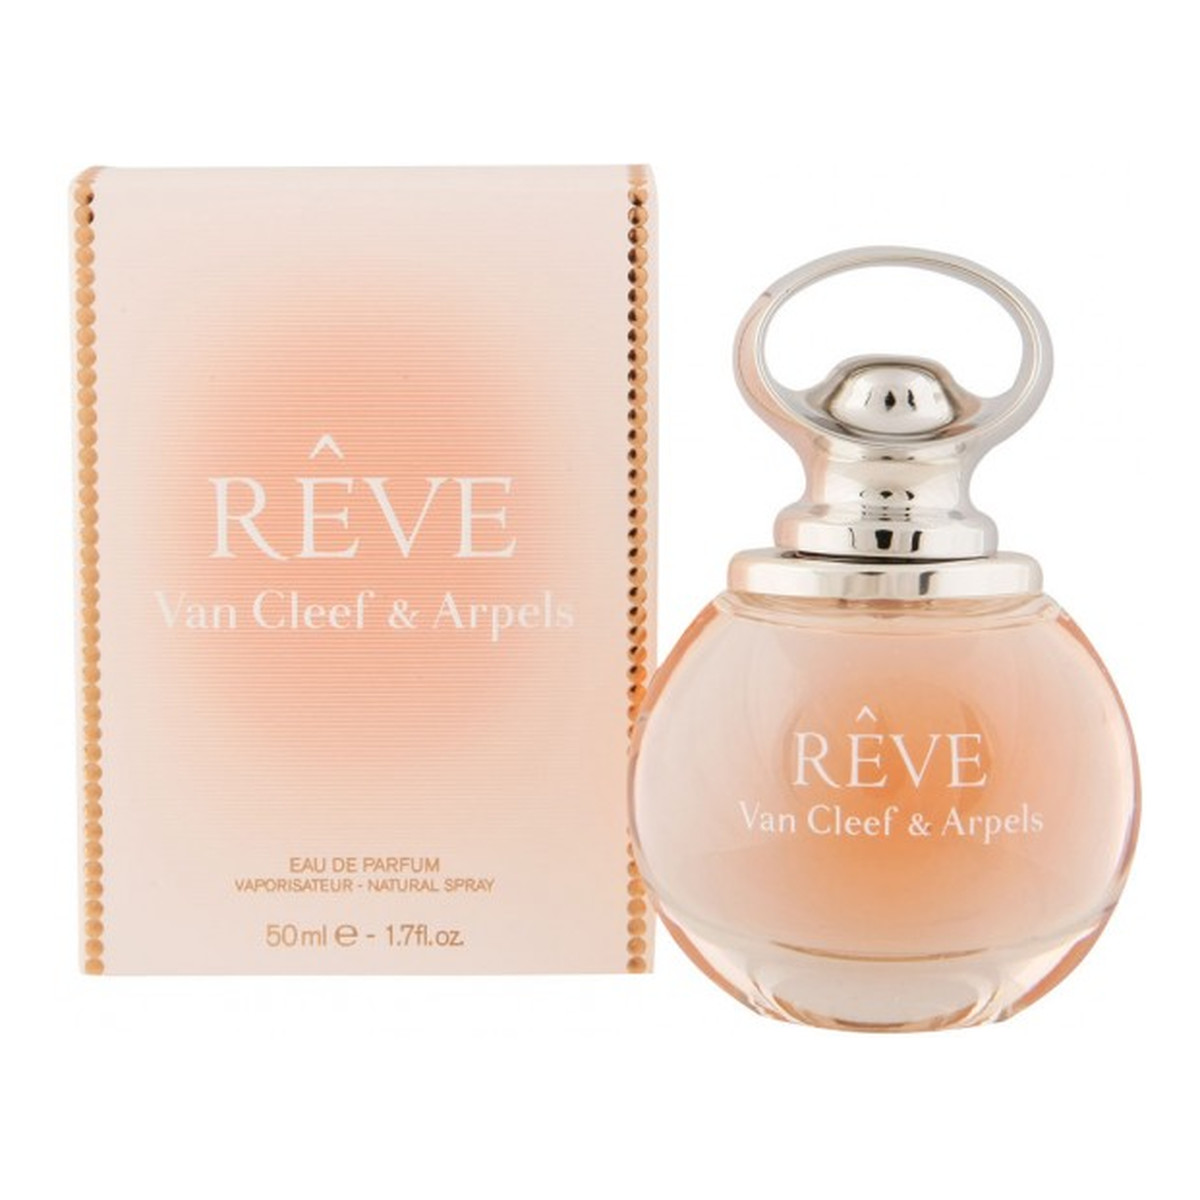 Van Cleef & Arpels Reve woda perfumowana 50ml